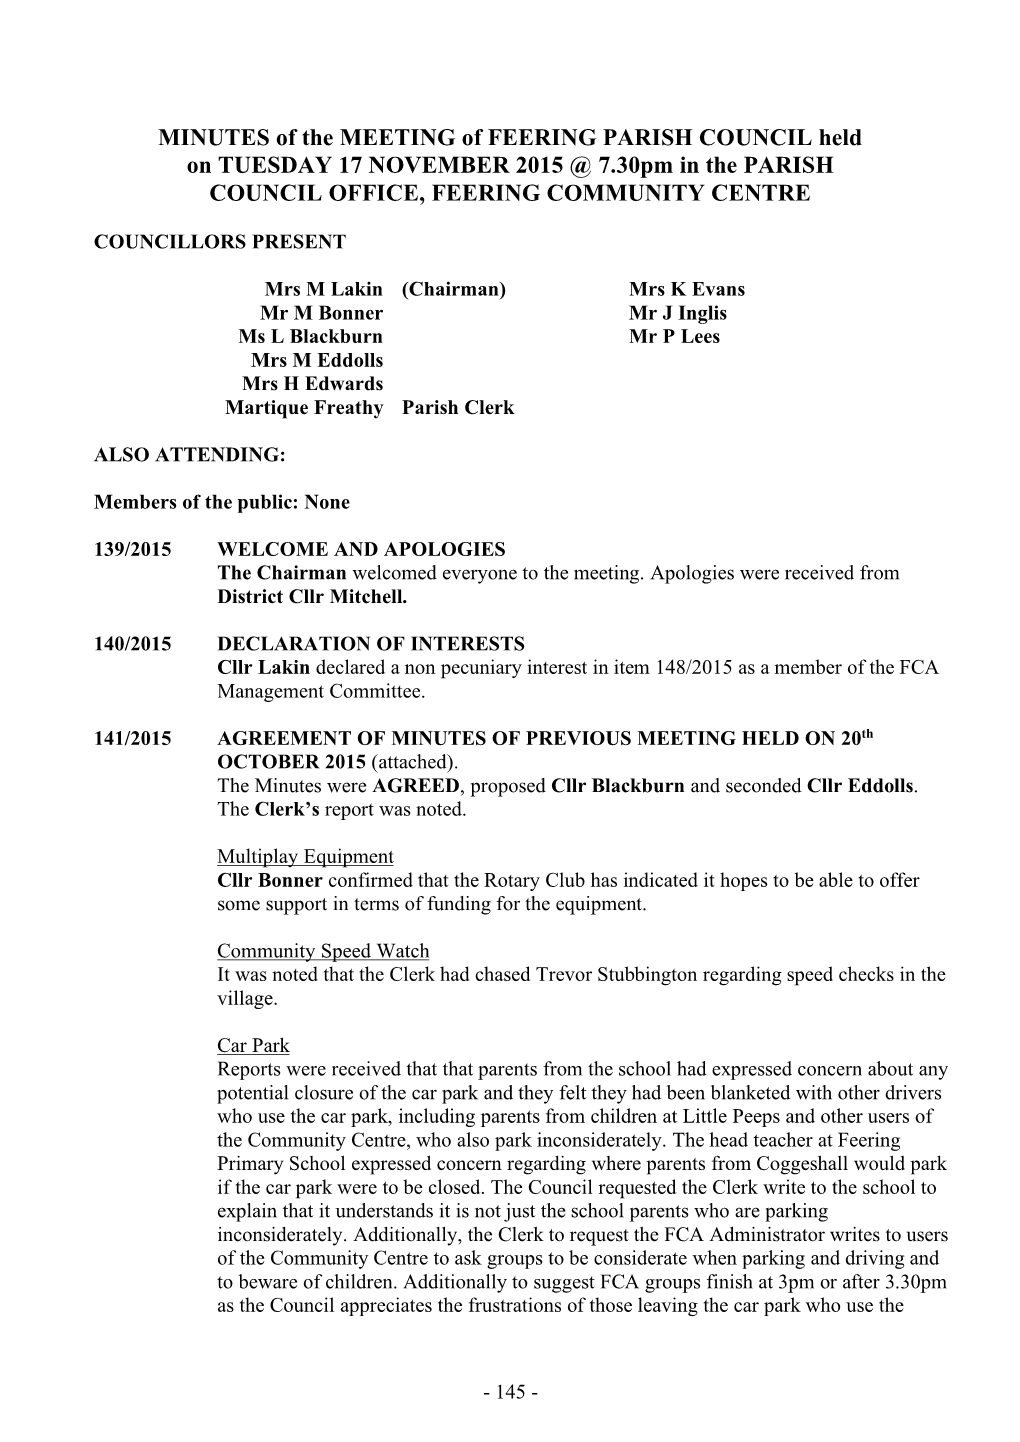 17 November 2015 Full Council Minutes